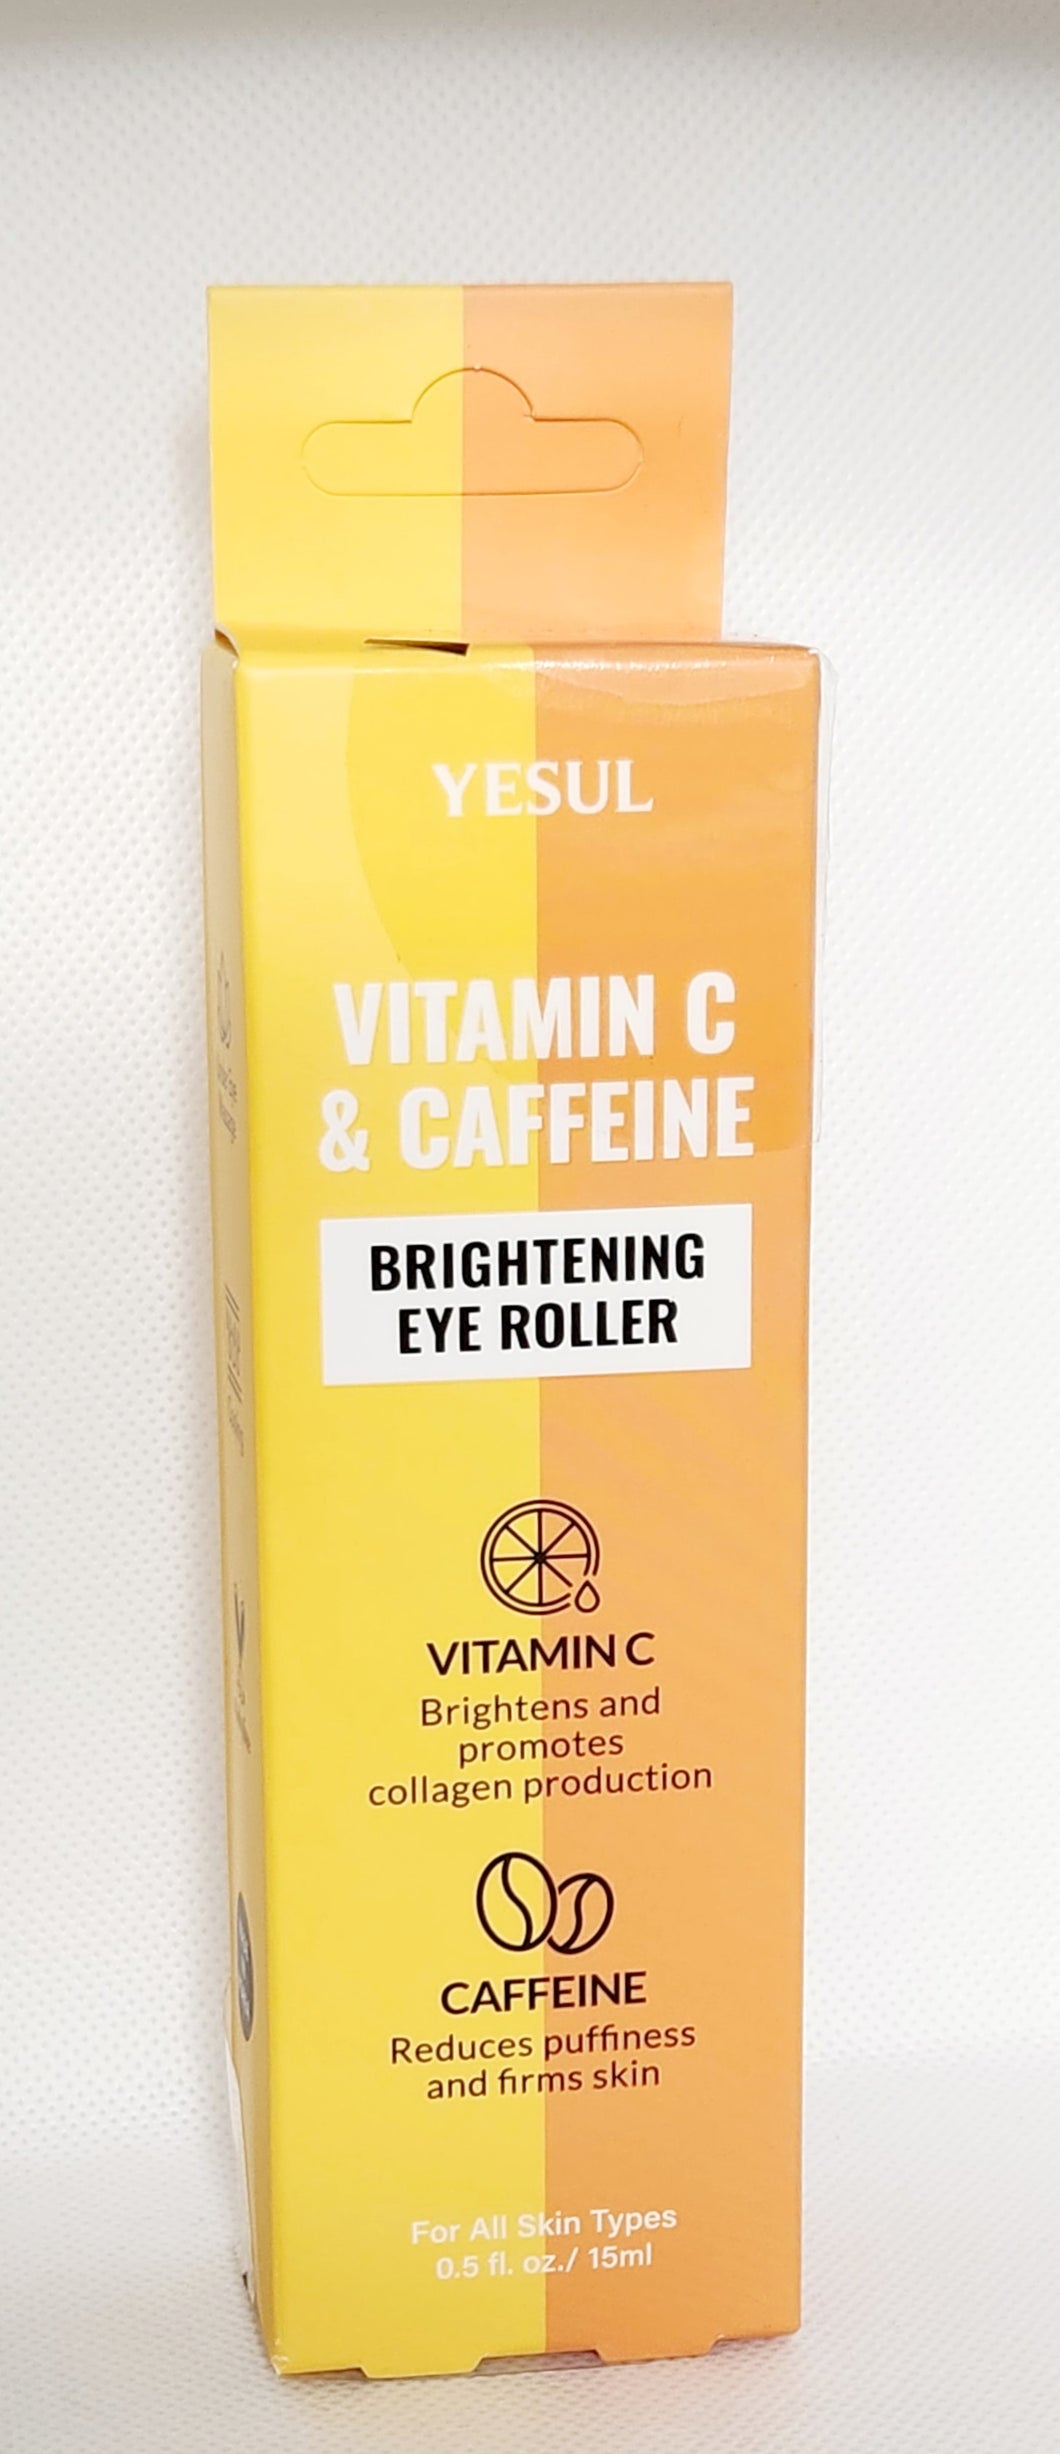 Yesul Vitamin C & Caffeine brightening Eye Roller